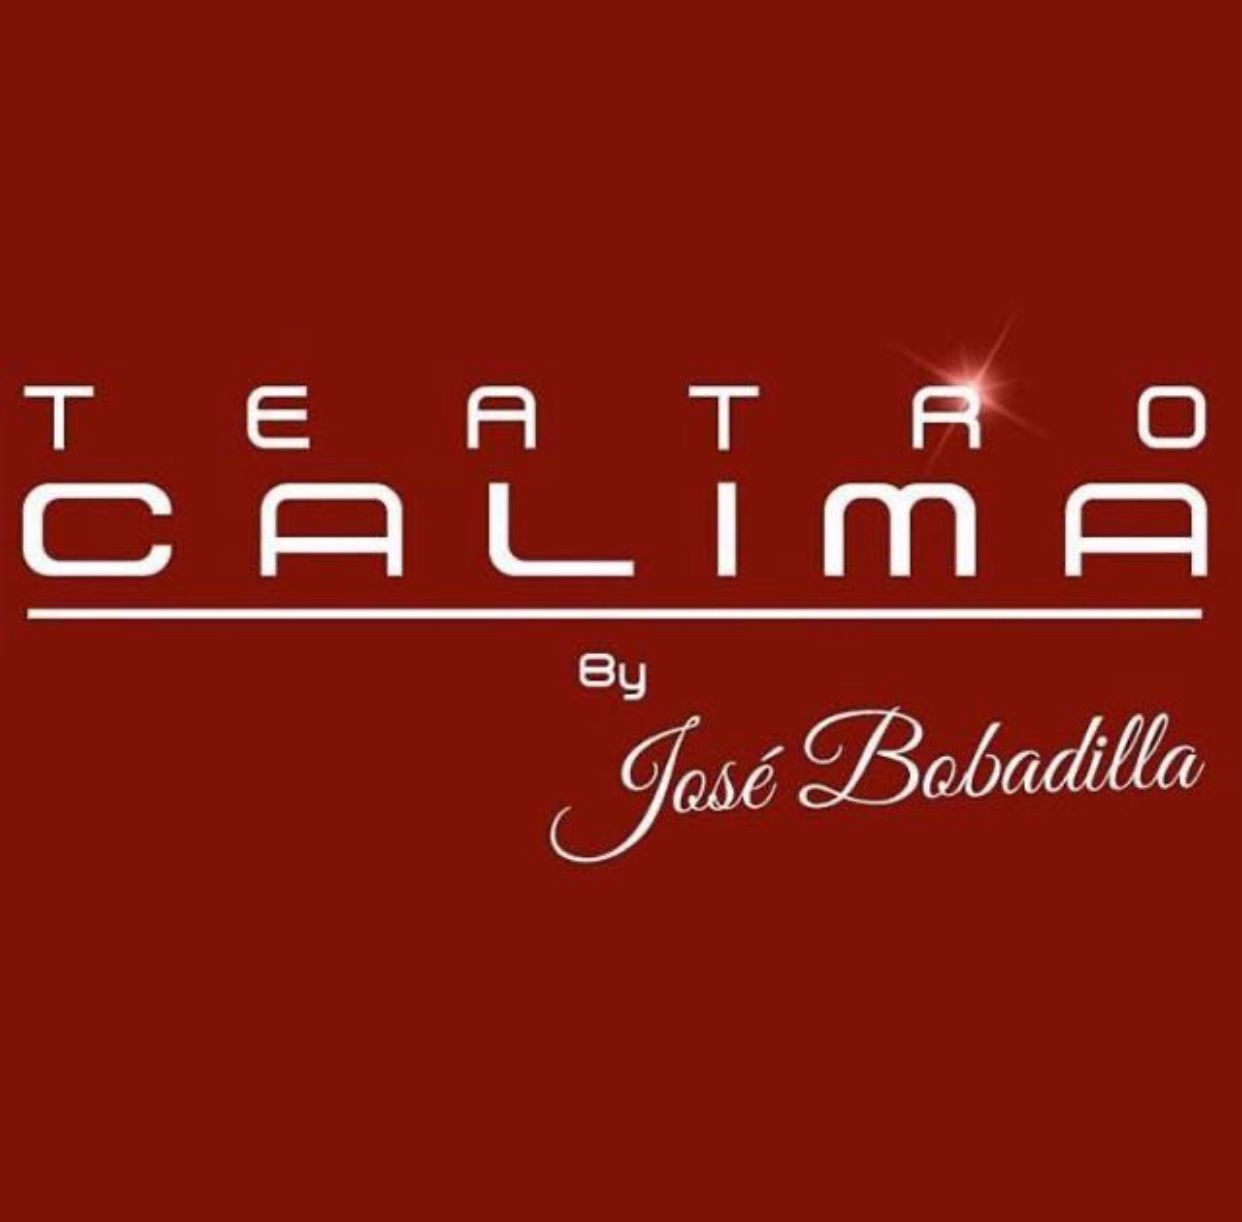 Teatro Calima